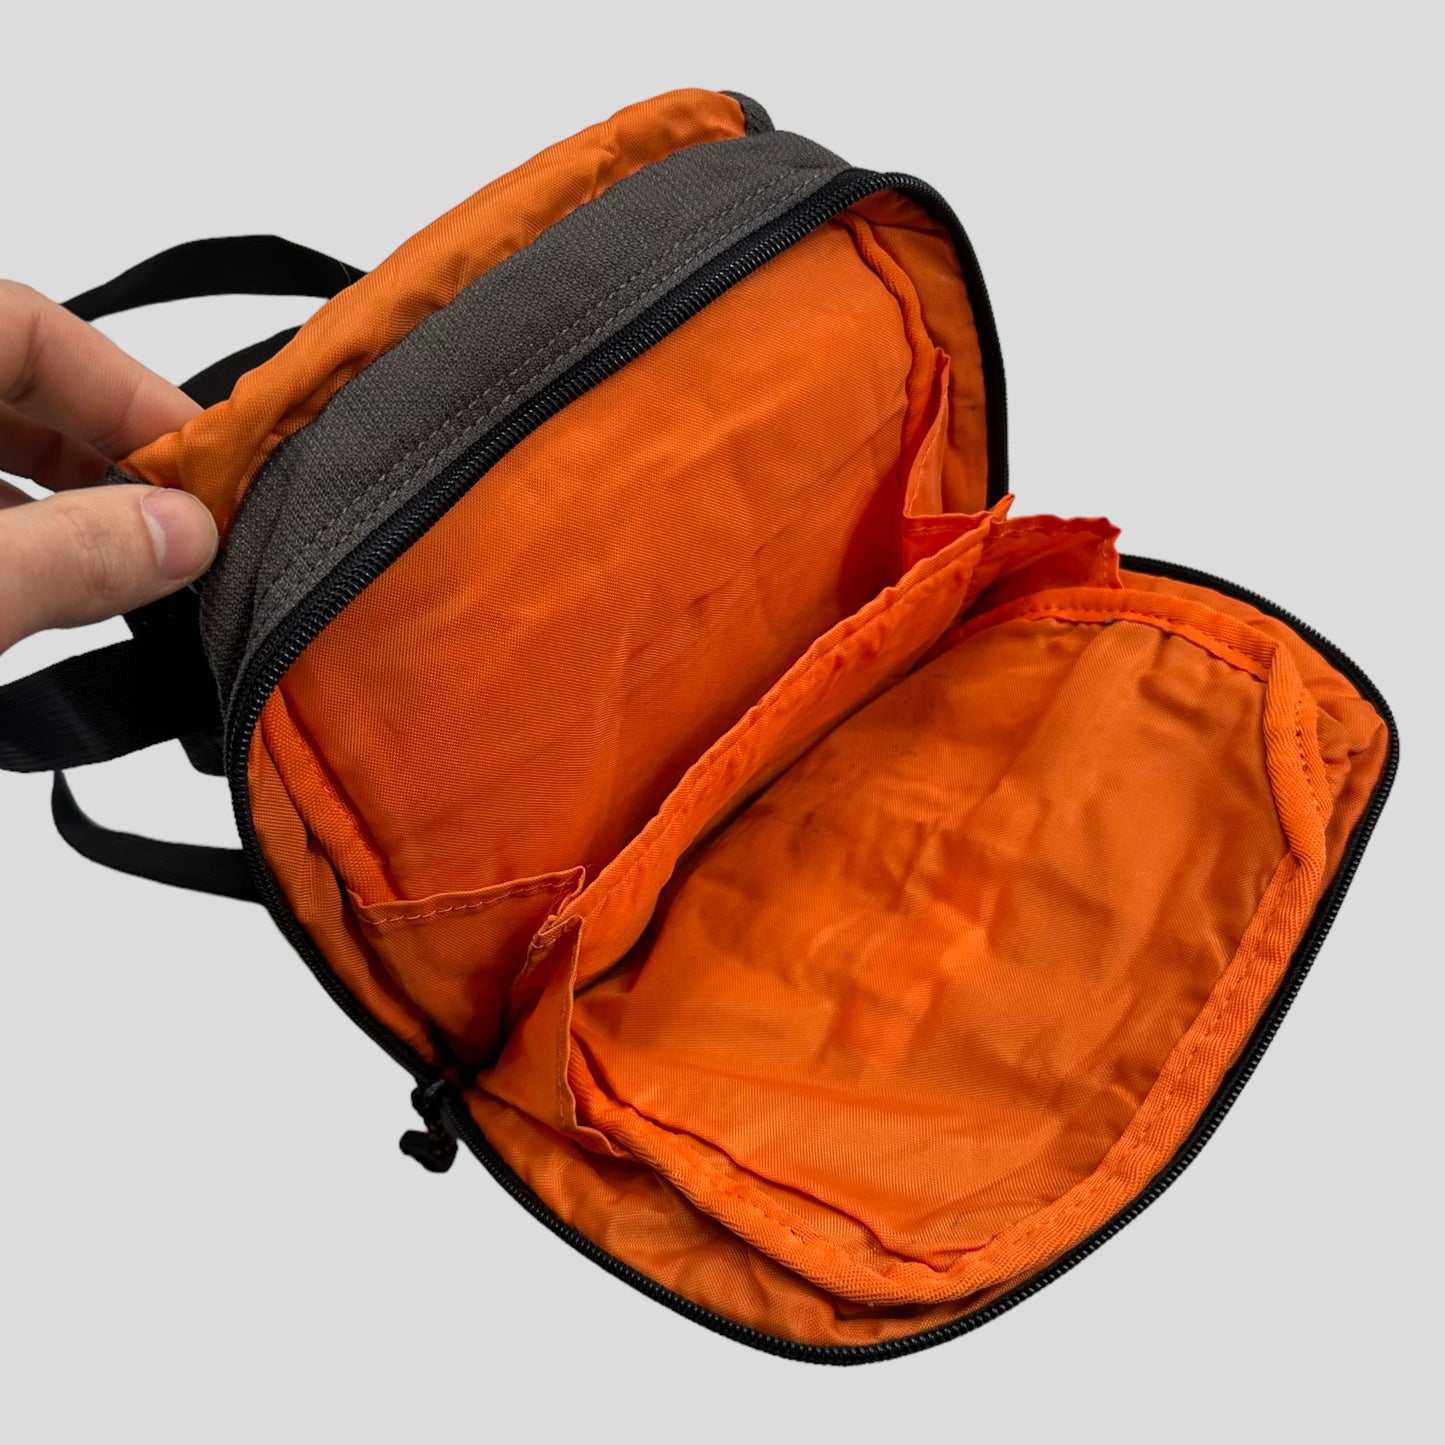 Nike 00’s Ripstop Utility Crossbody Bag